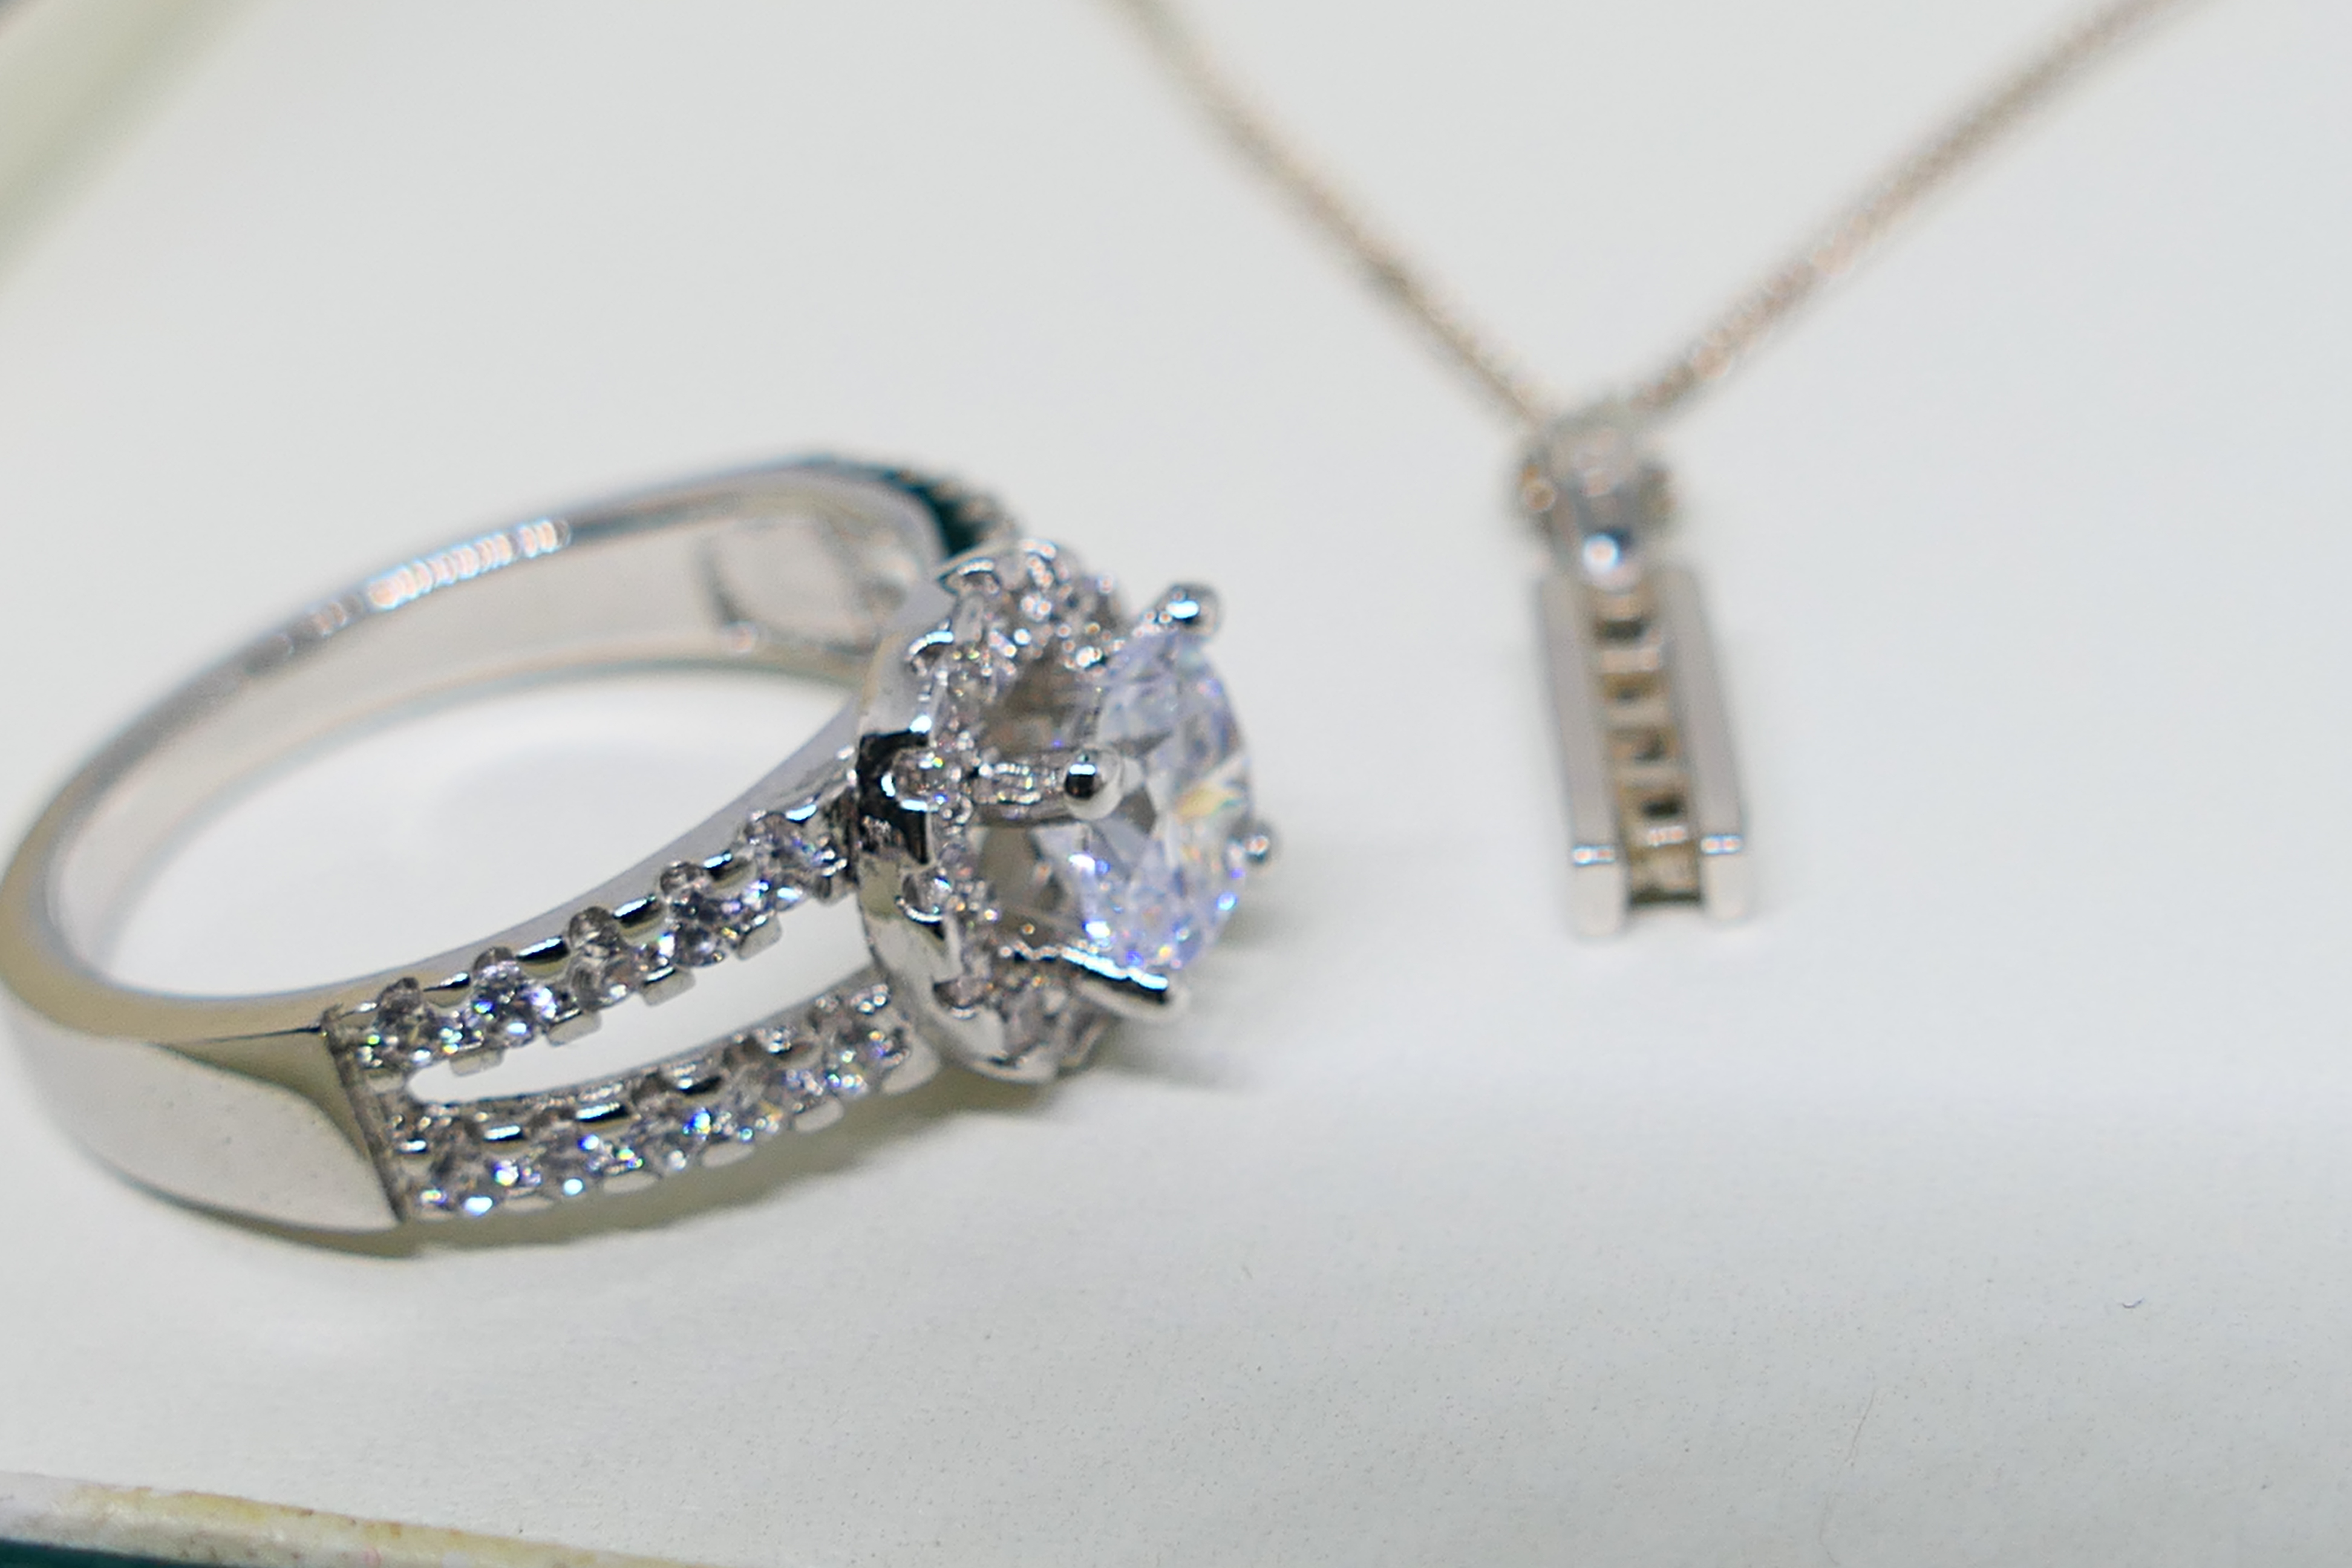 A 9ct white gold, diamond set pendant on - Image 8 of 8